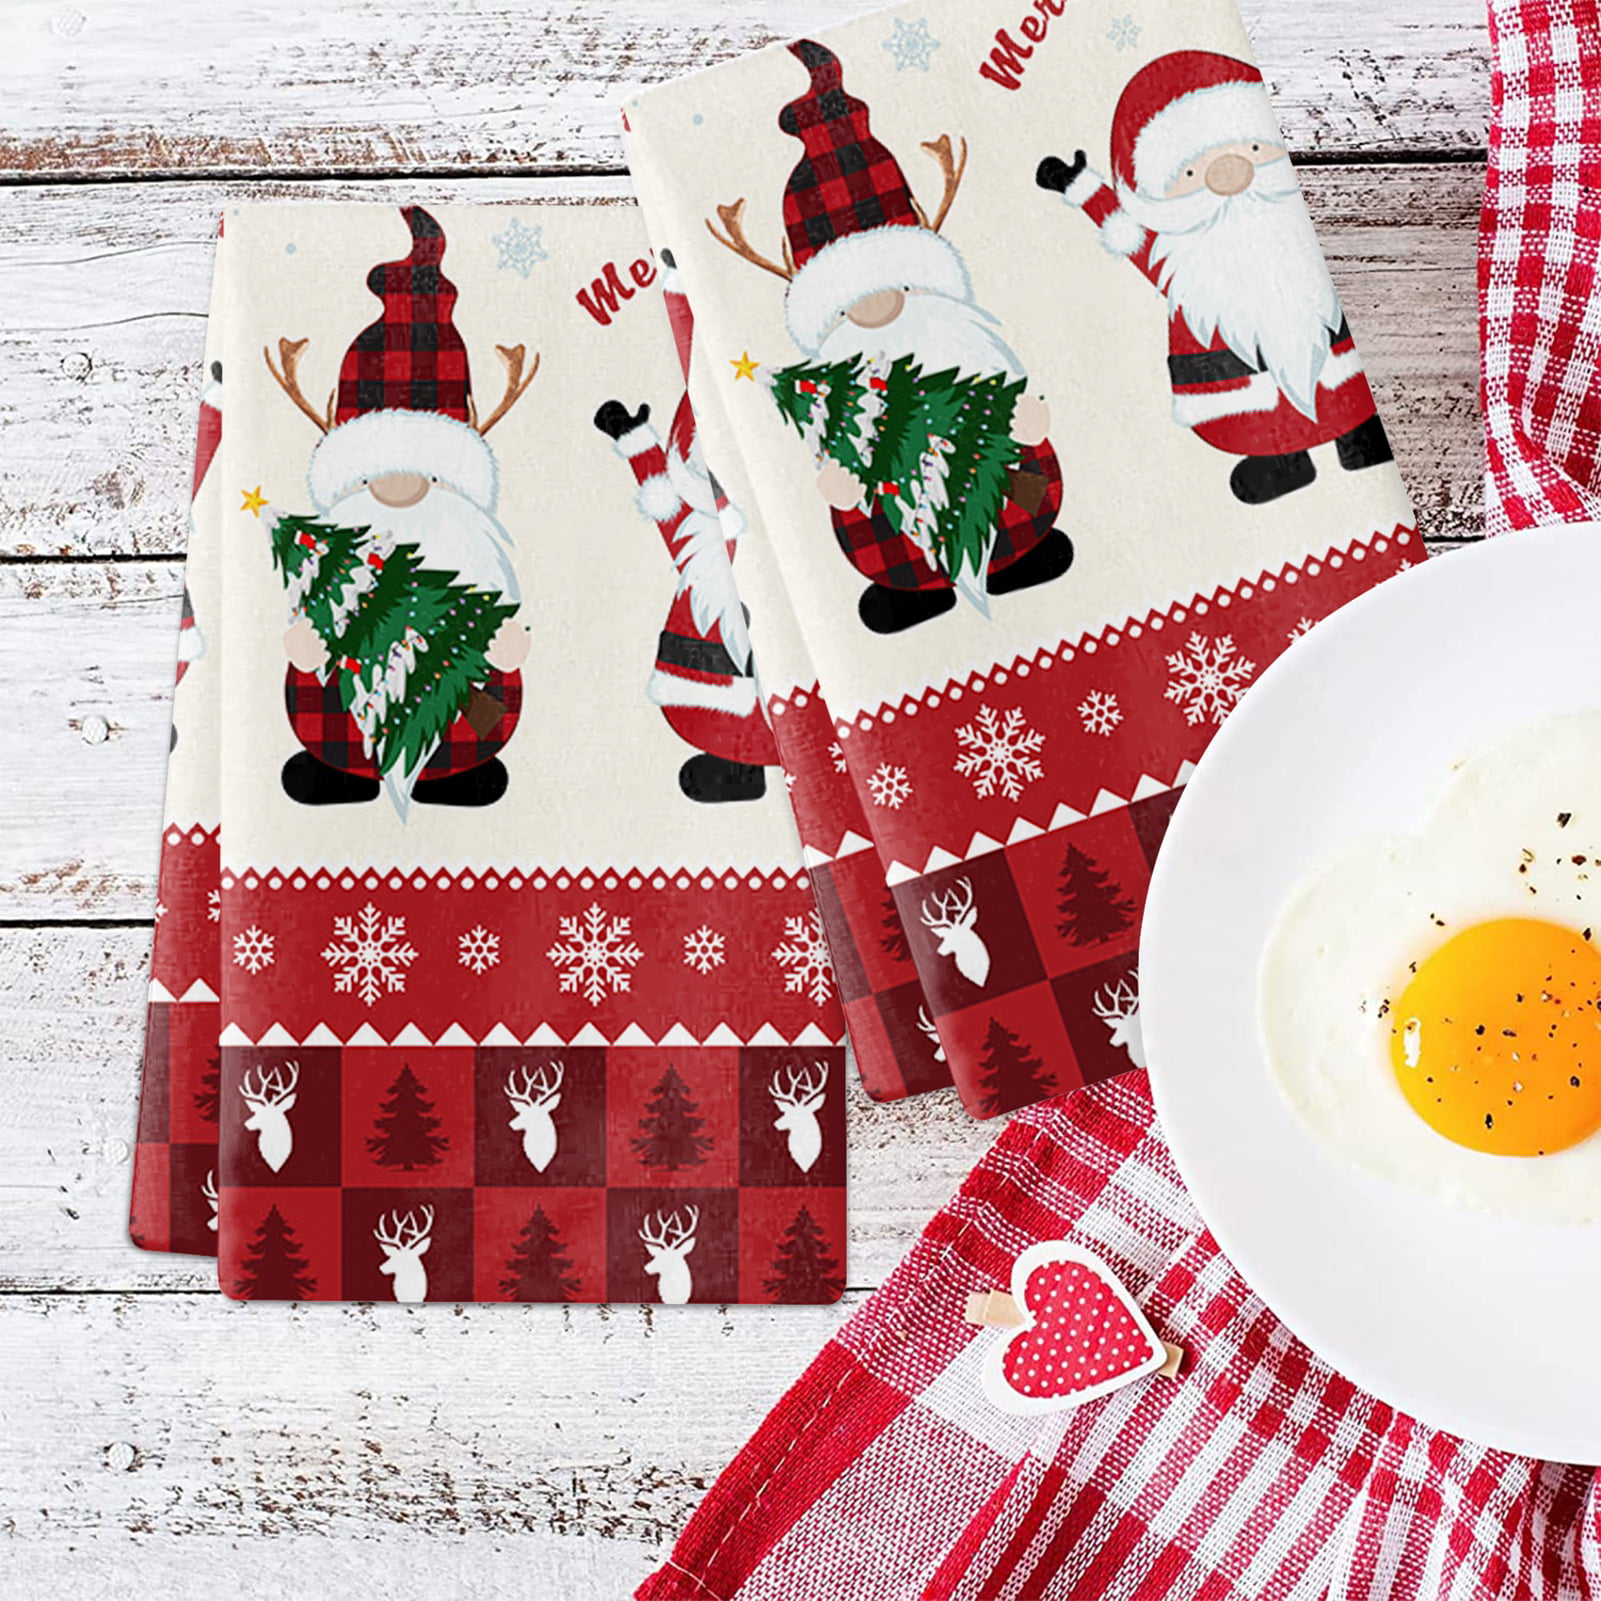 Red Buffalo Plaid Tea Towel, Eat Drink Be Merry Christmas Towel